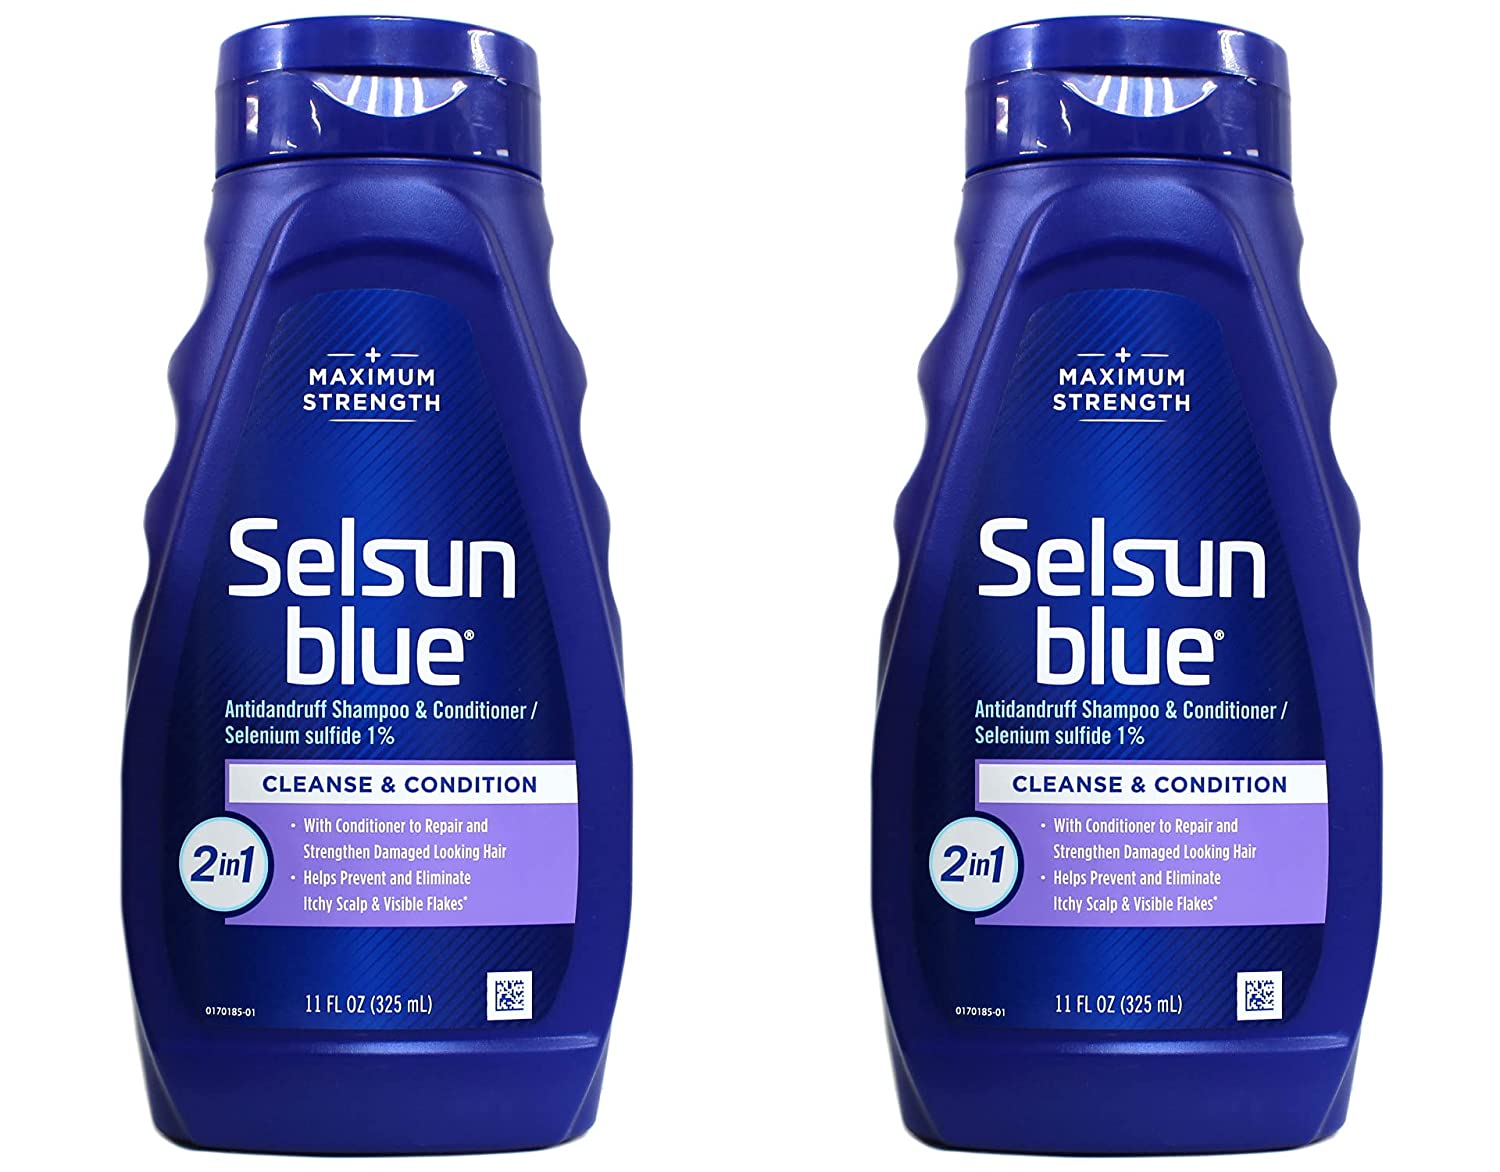 3. Selsun Blue Naturals Dandruff Shampoo - wide 8